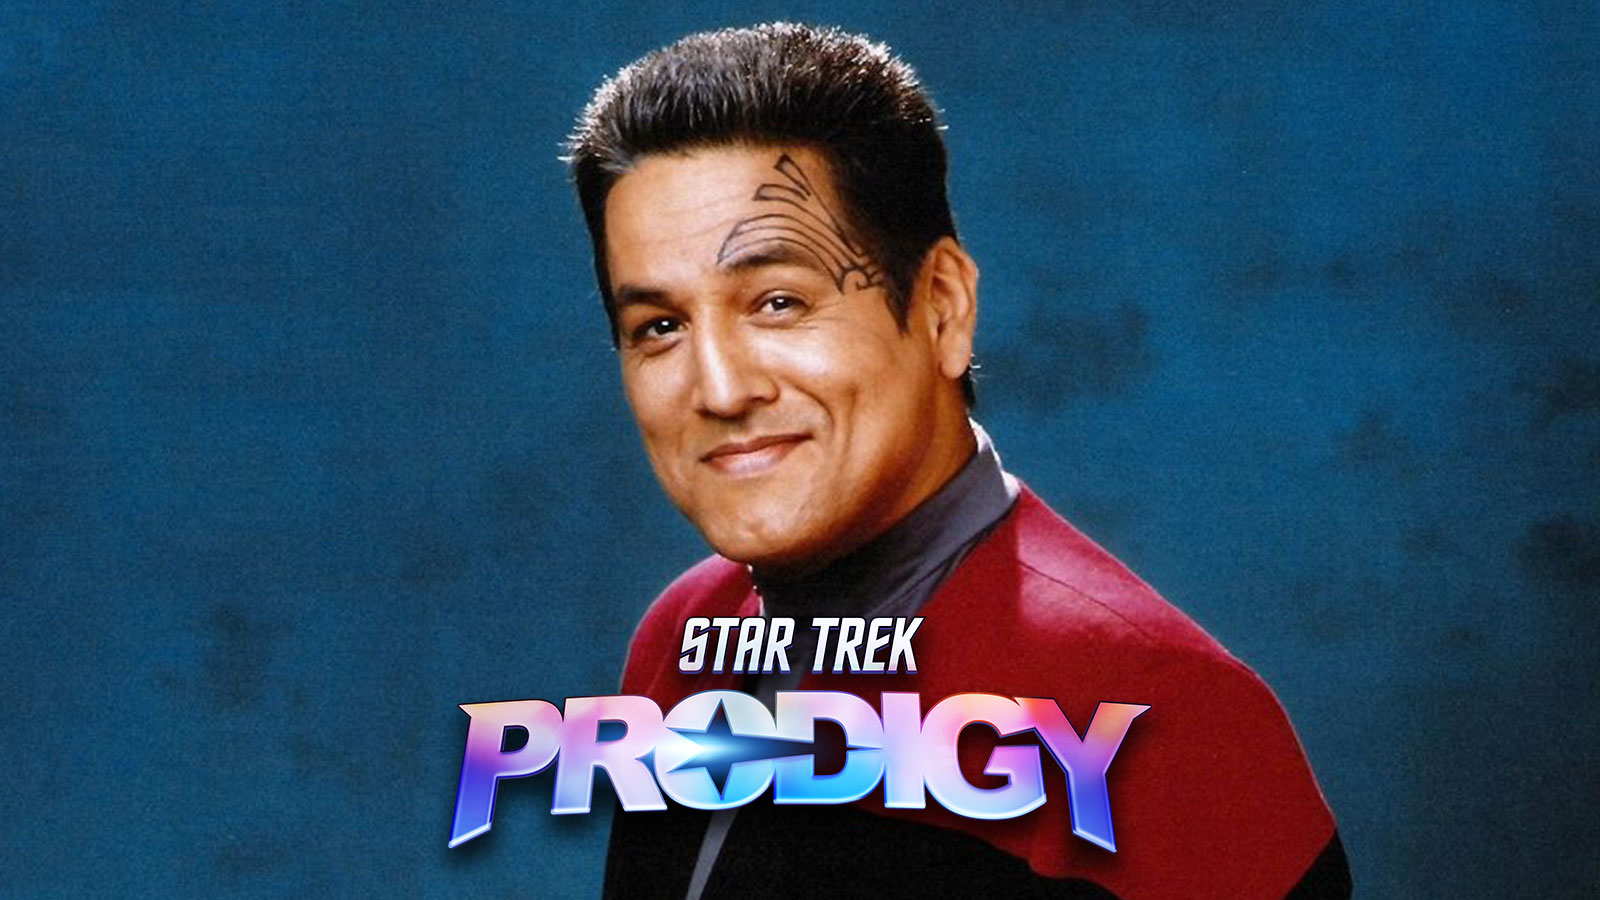 Robert Beltran Is Officially Returning To Star Trek As Chakotay On ‘Prodigy’